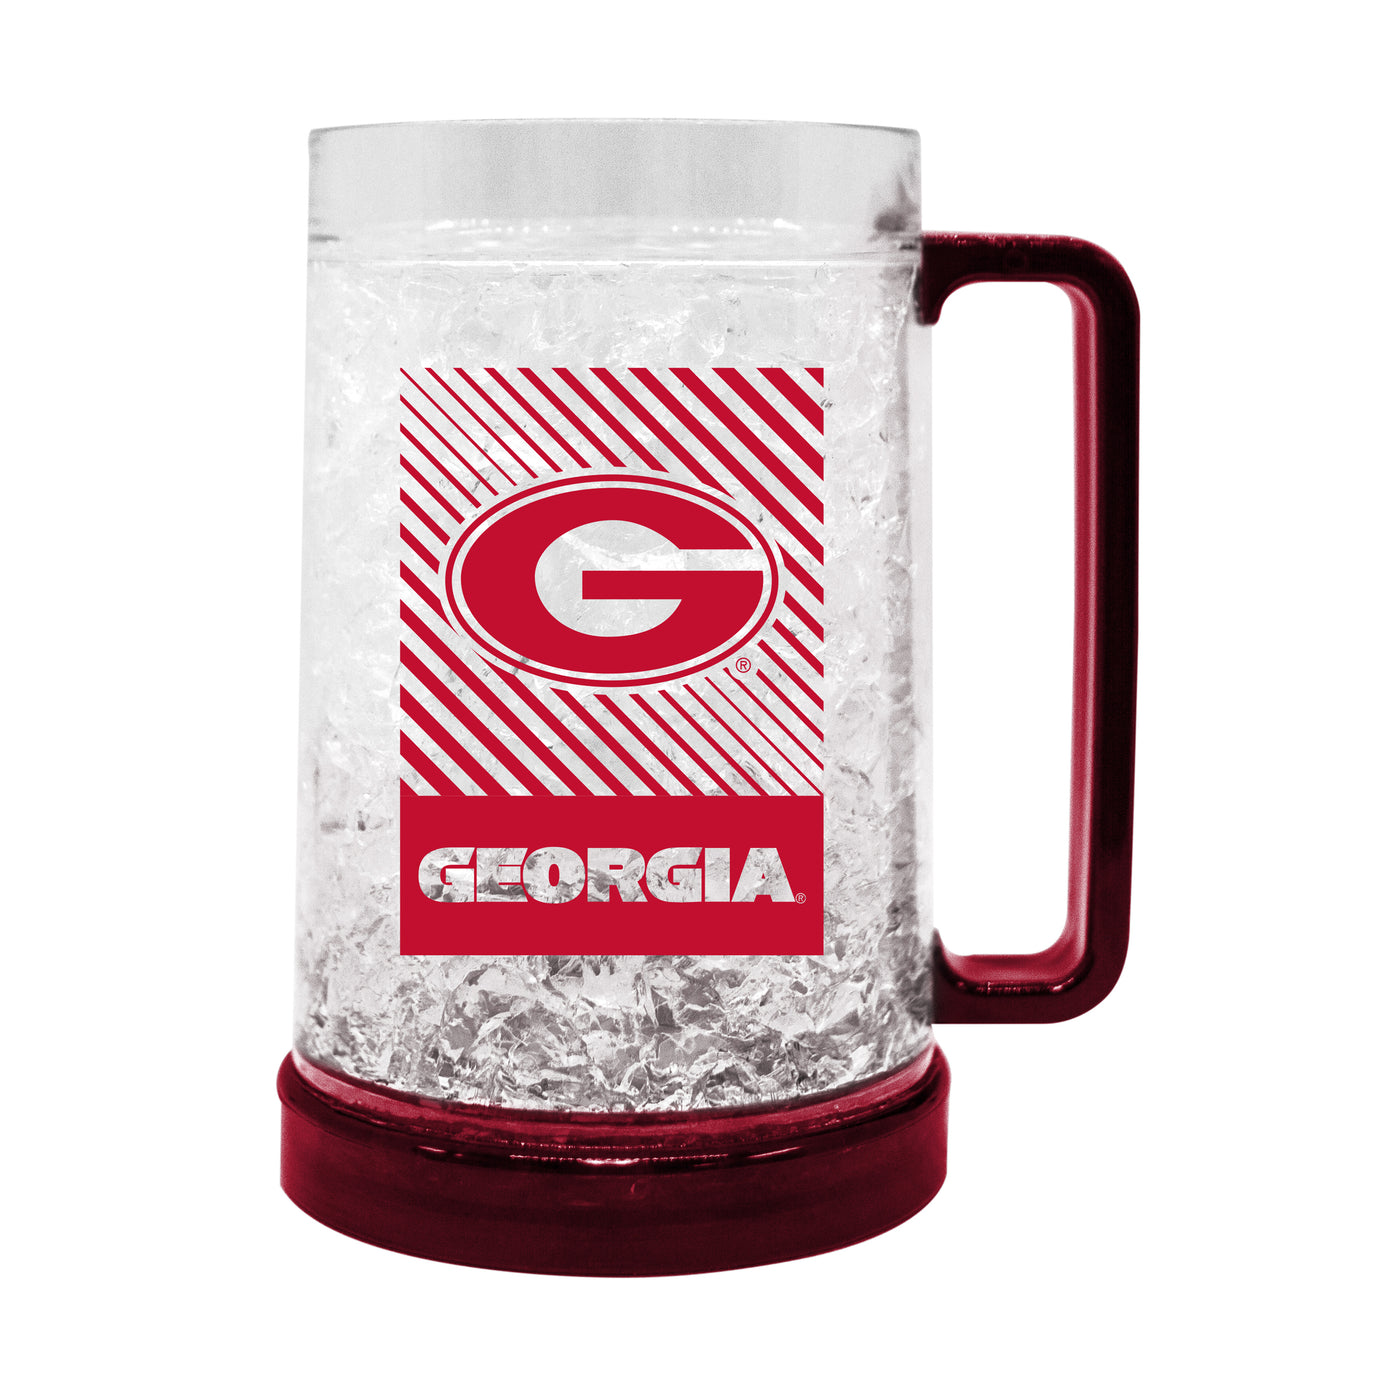 Georgia Freezer Mug